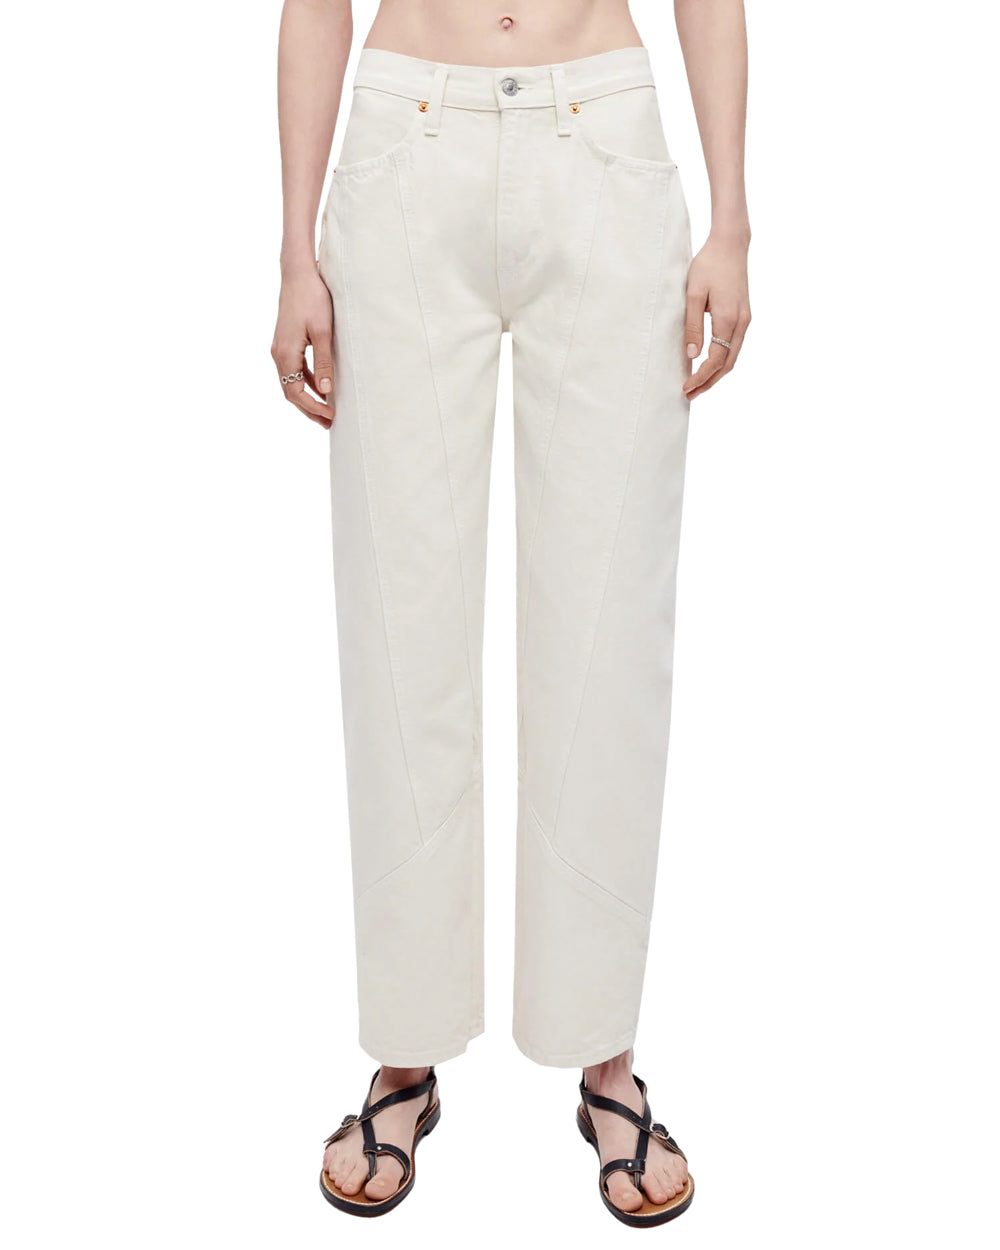 Wide Taper Jean in Vintage White